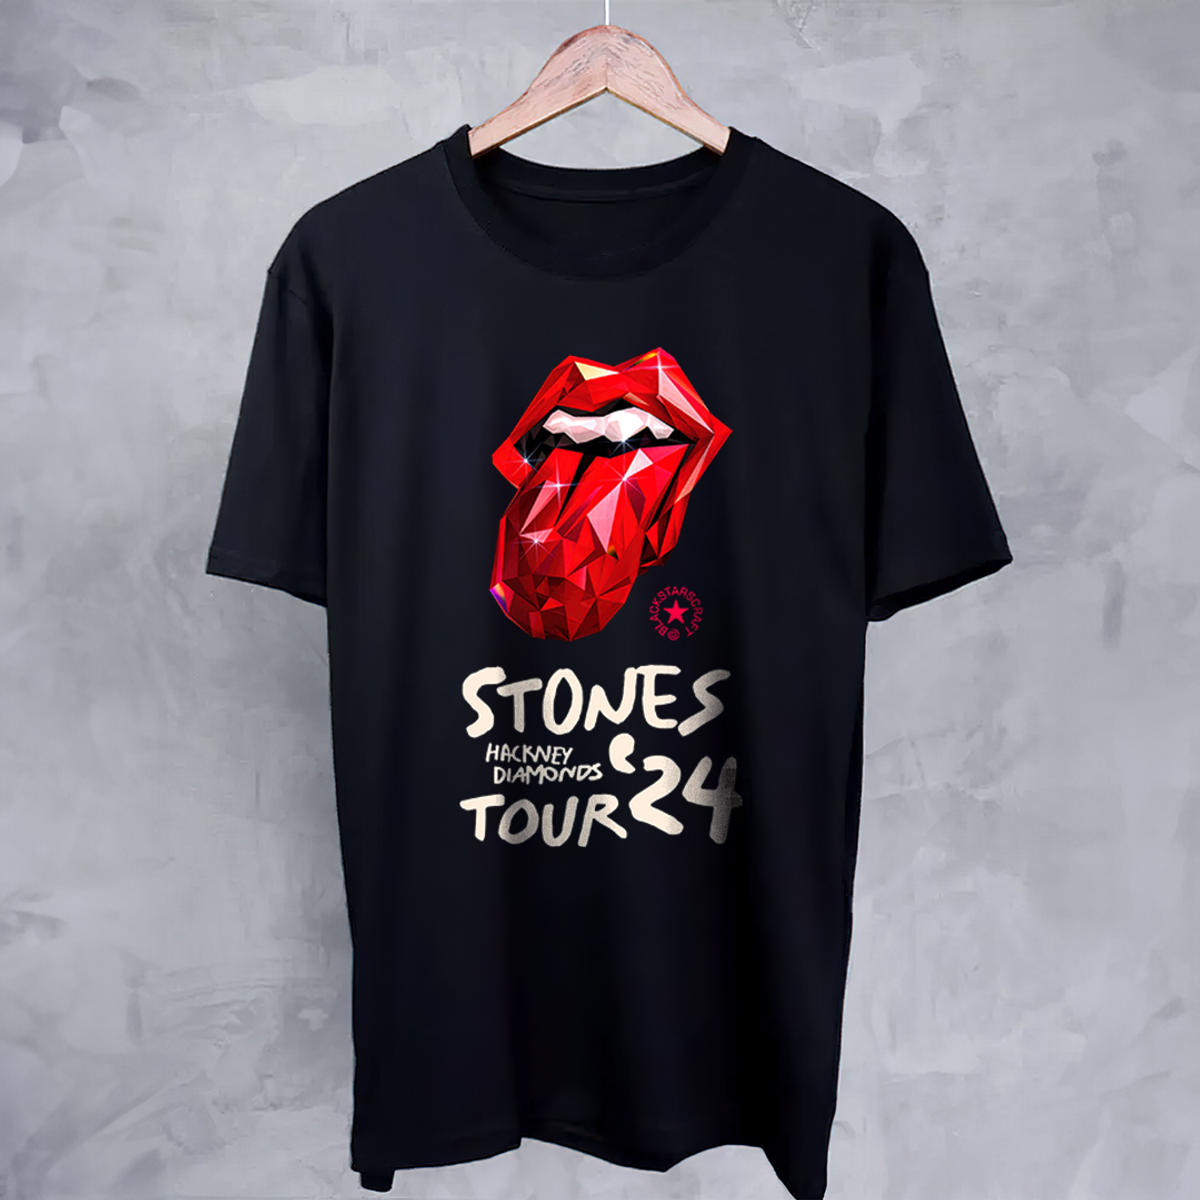 Nome do produto: Hackney Diamonds Tour - The Rolling Stones